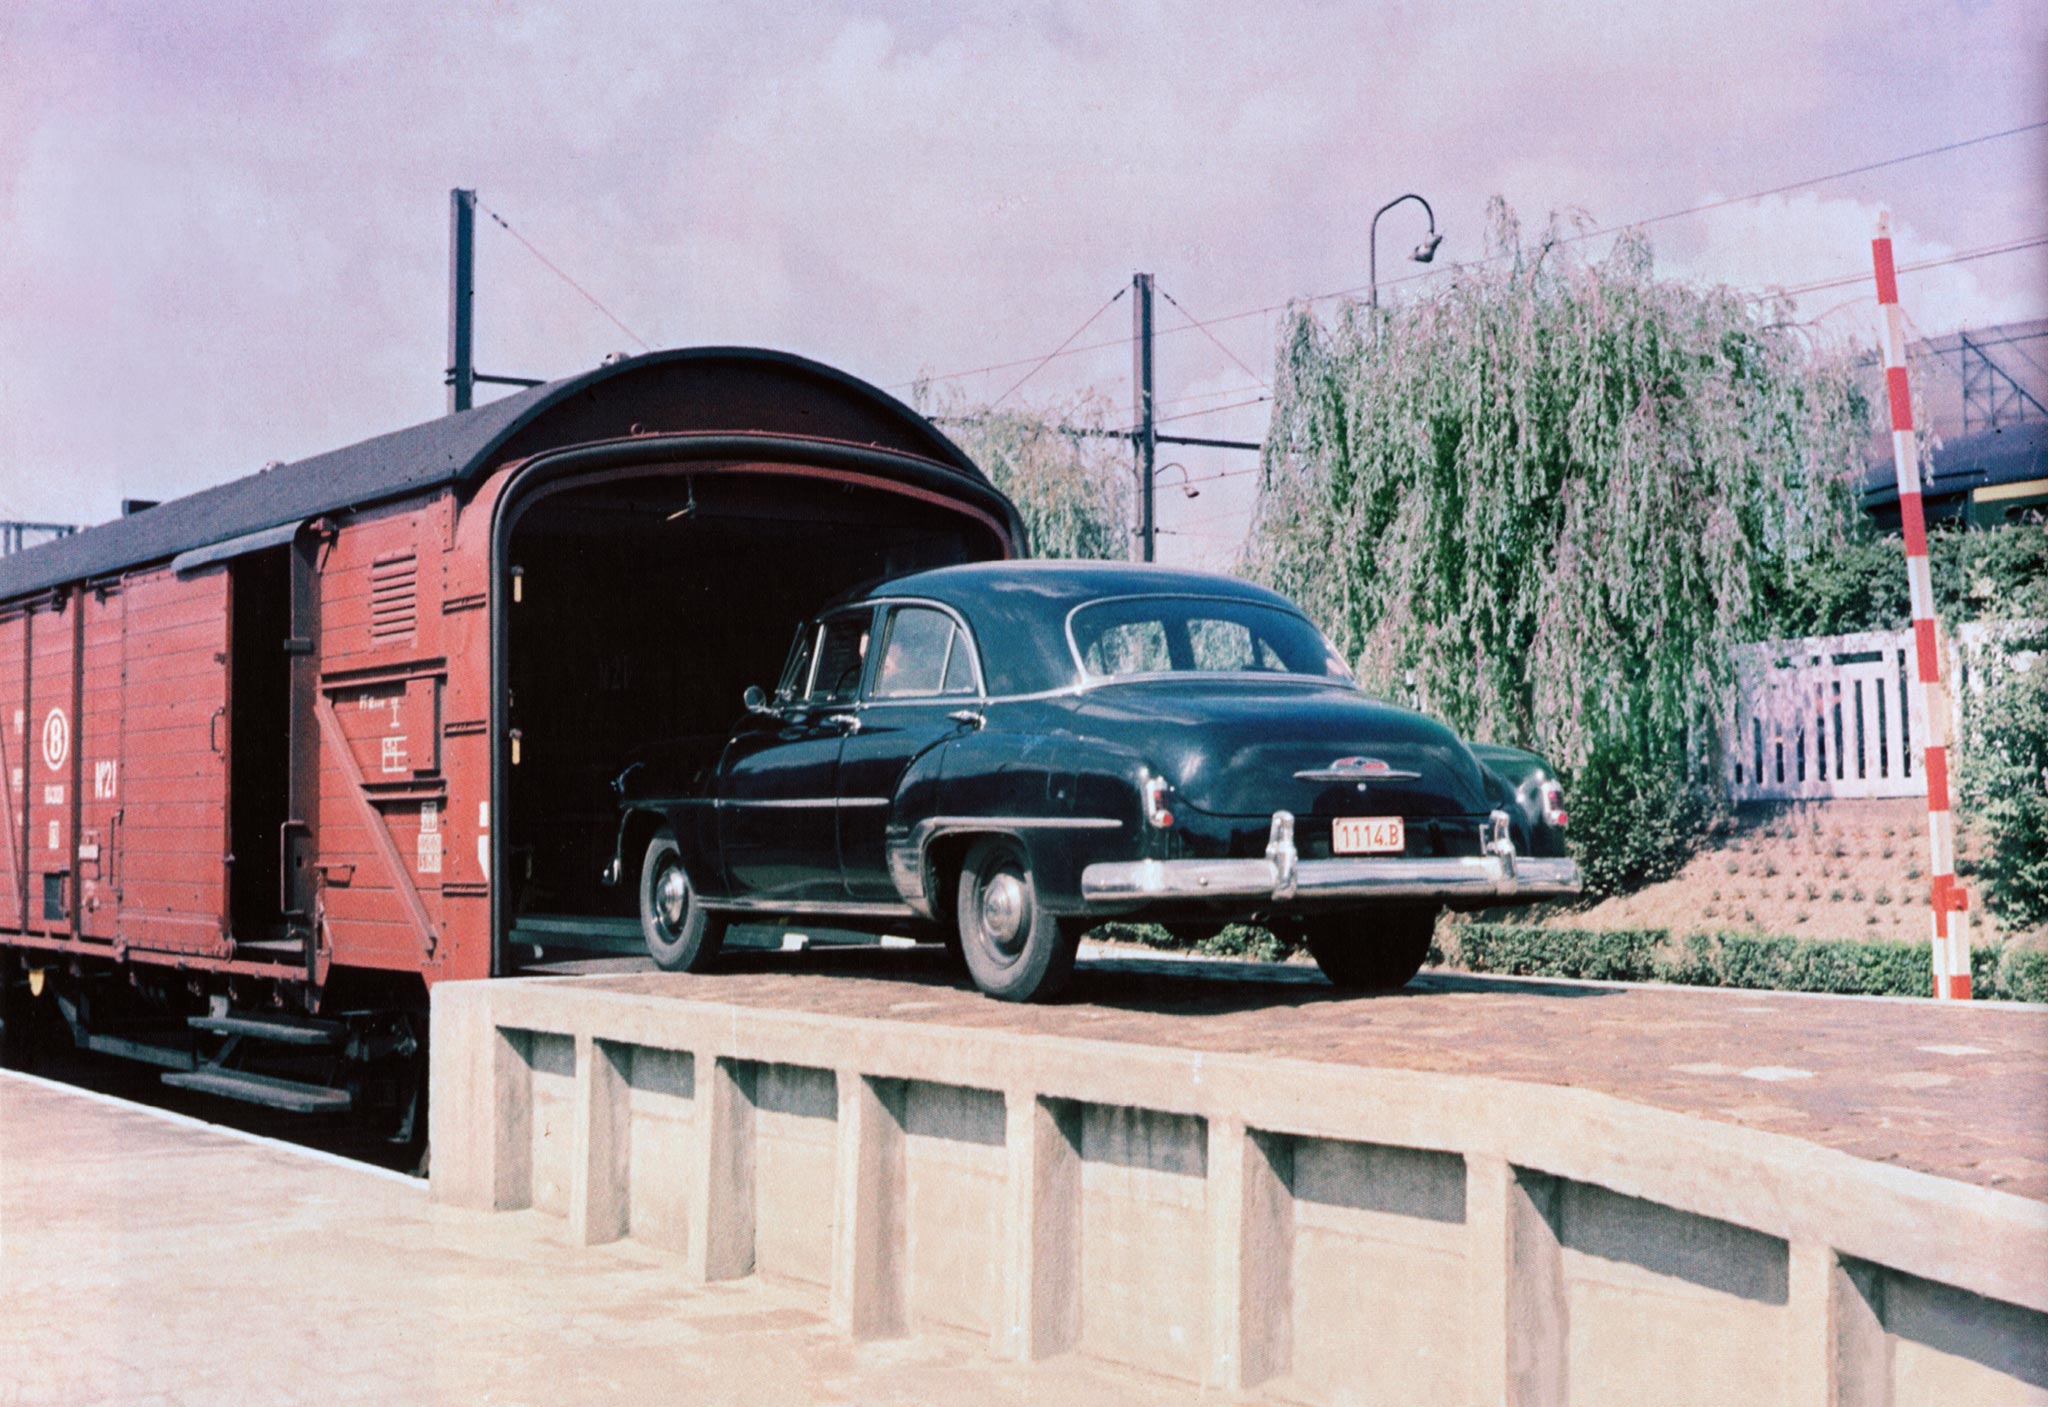 Load car. Sleeper автомобиль. Двухэтажный трейлер 1956. Sleeping car Railway. Chipin around 1960.